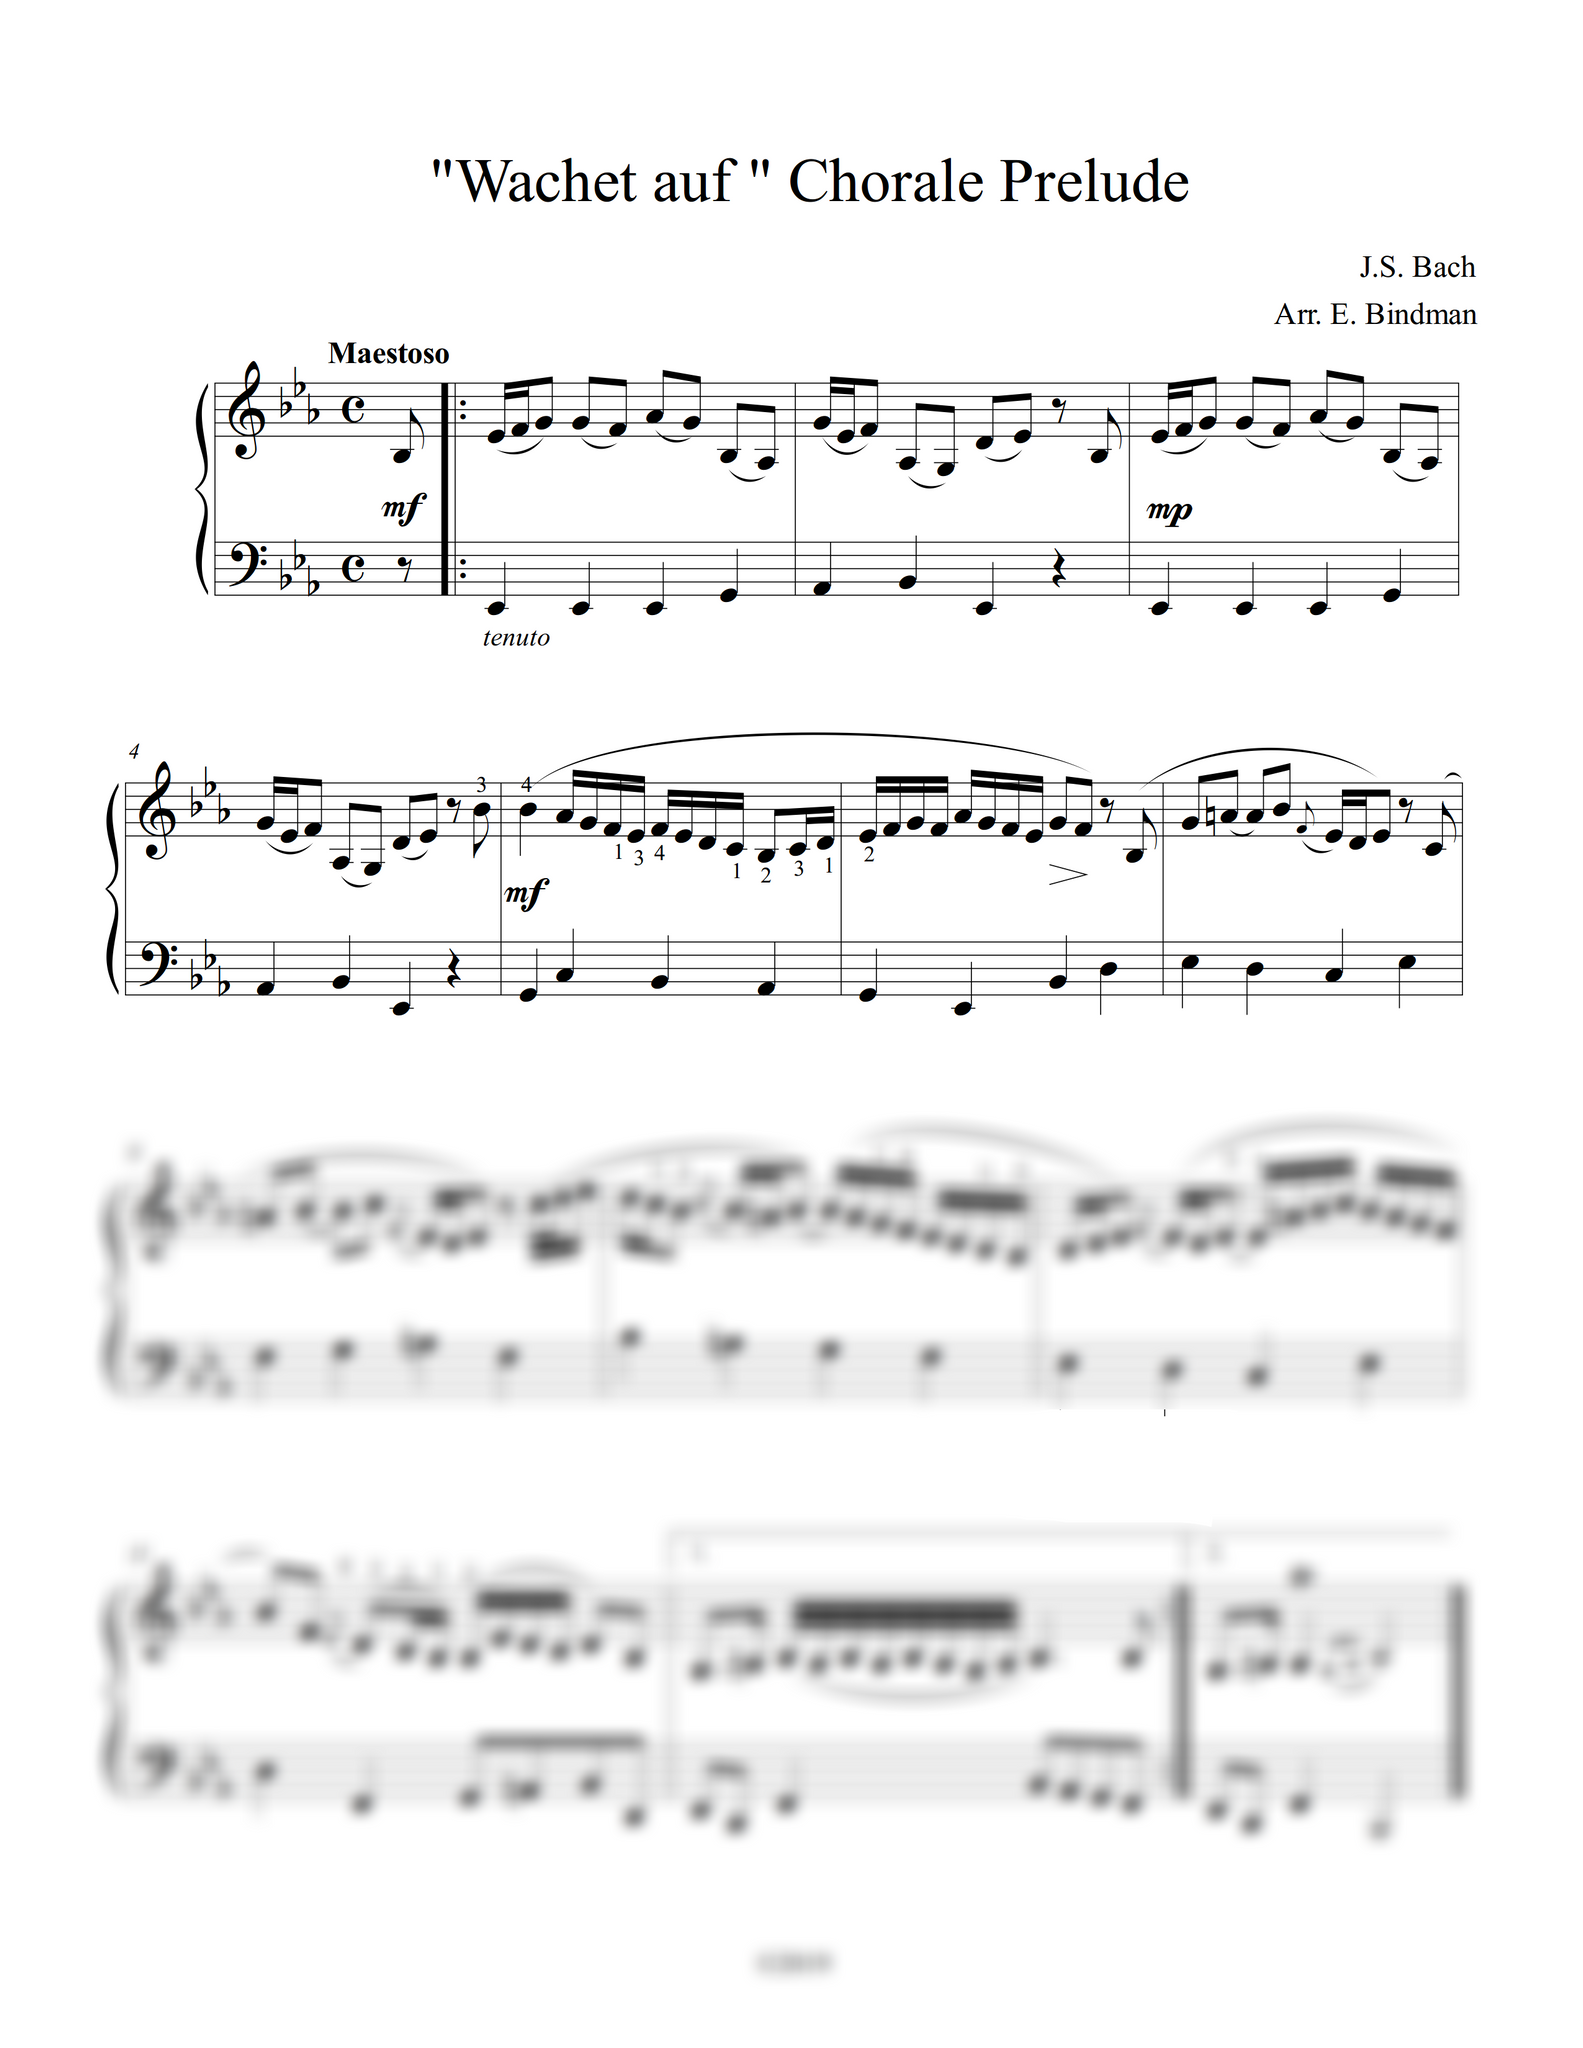 J.S. Bach: “Wachet auf” Chorale Prelude, BWV 645 – arranged for piano by Eleonor Bindman